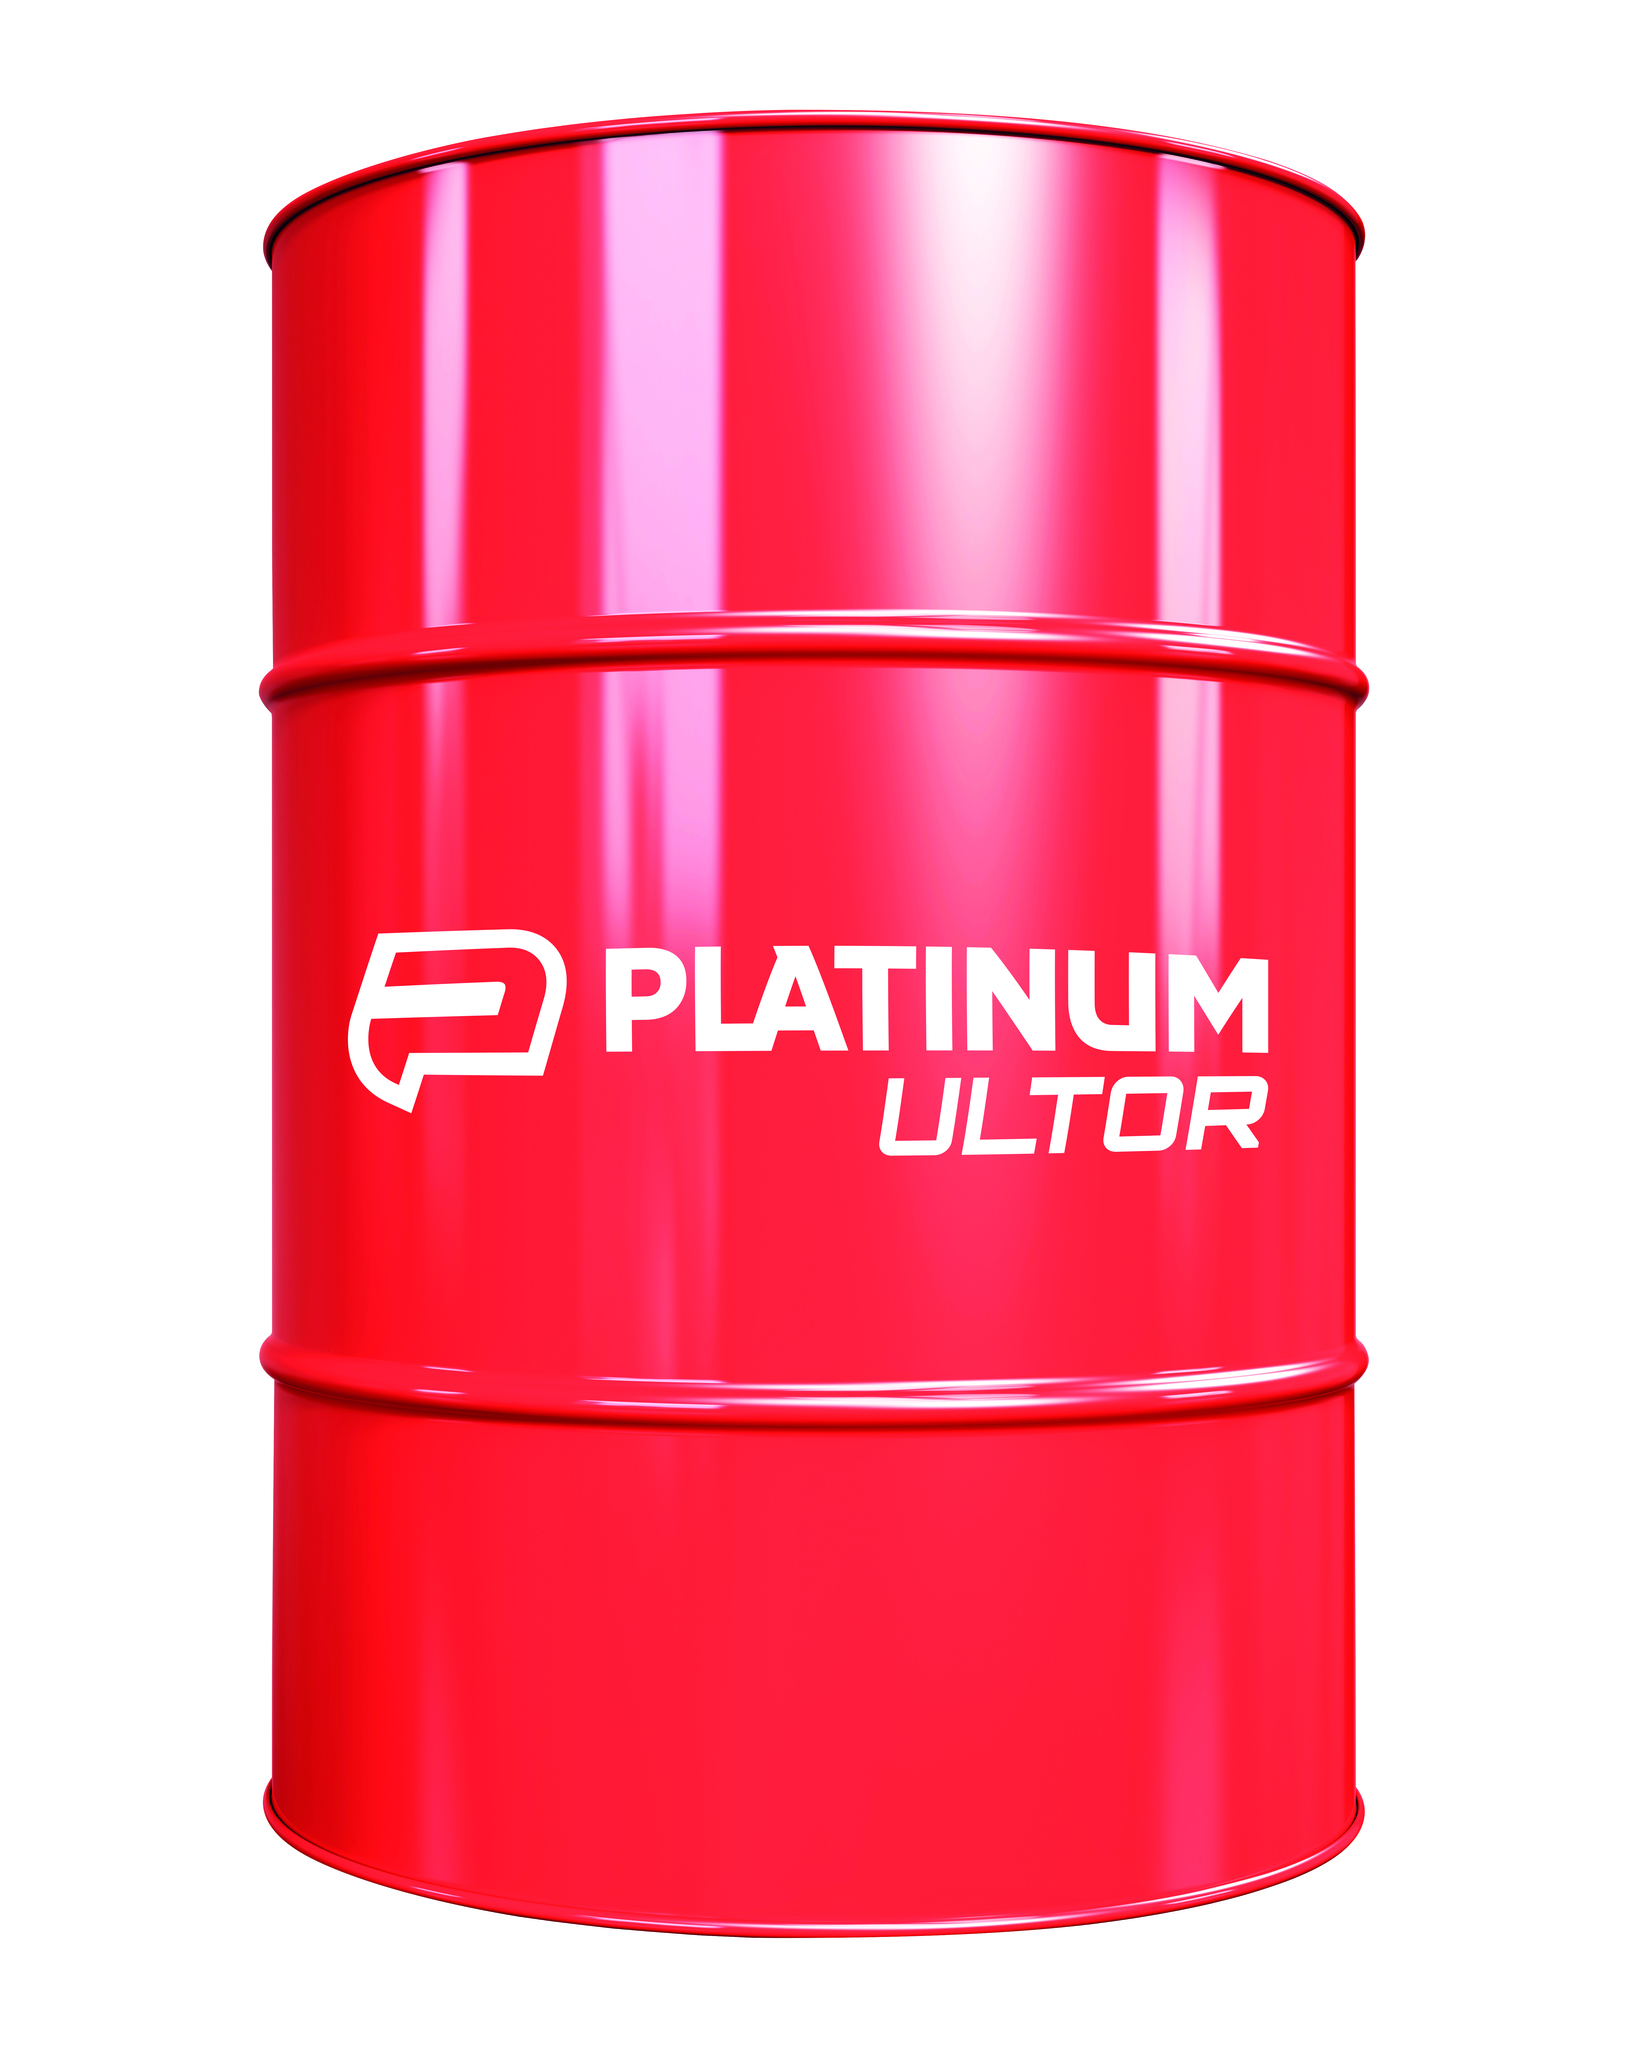 OrlenOil Platinum Ultor Progress 10W40 Полусинтетическое грузовое масло